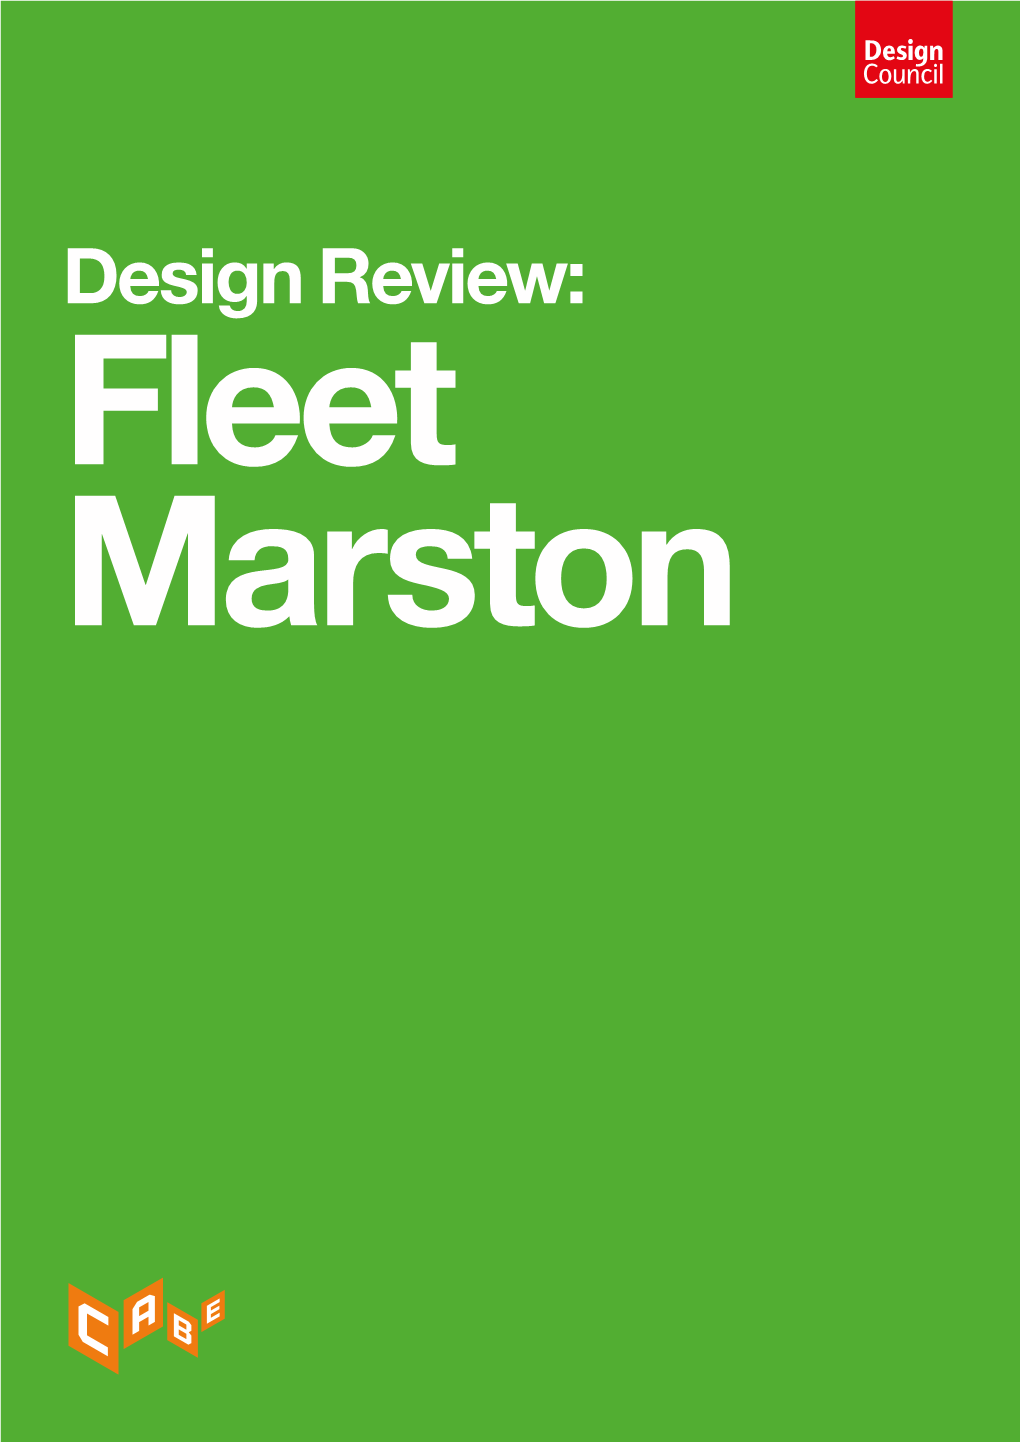 Download the Fleet Marston, Aylesbury